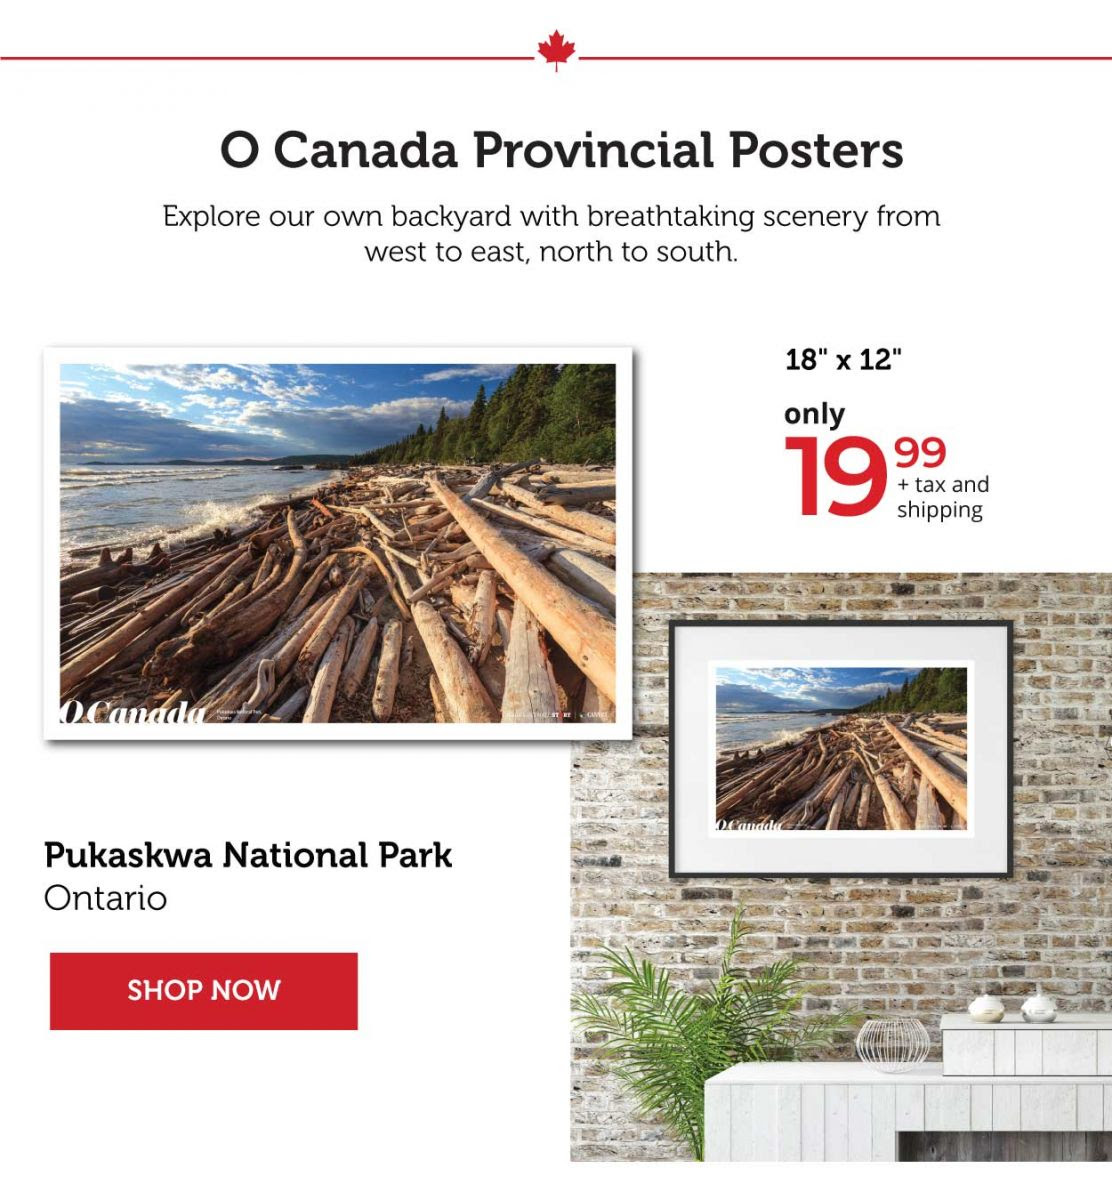 O Canada Provincial Posters